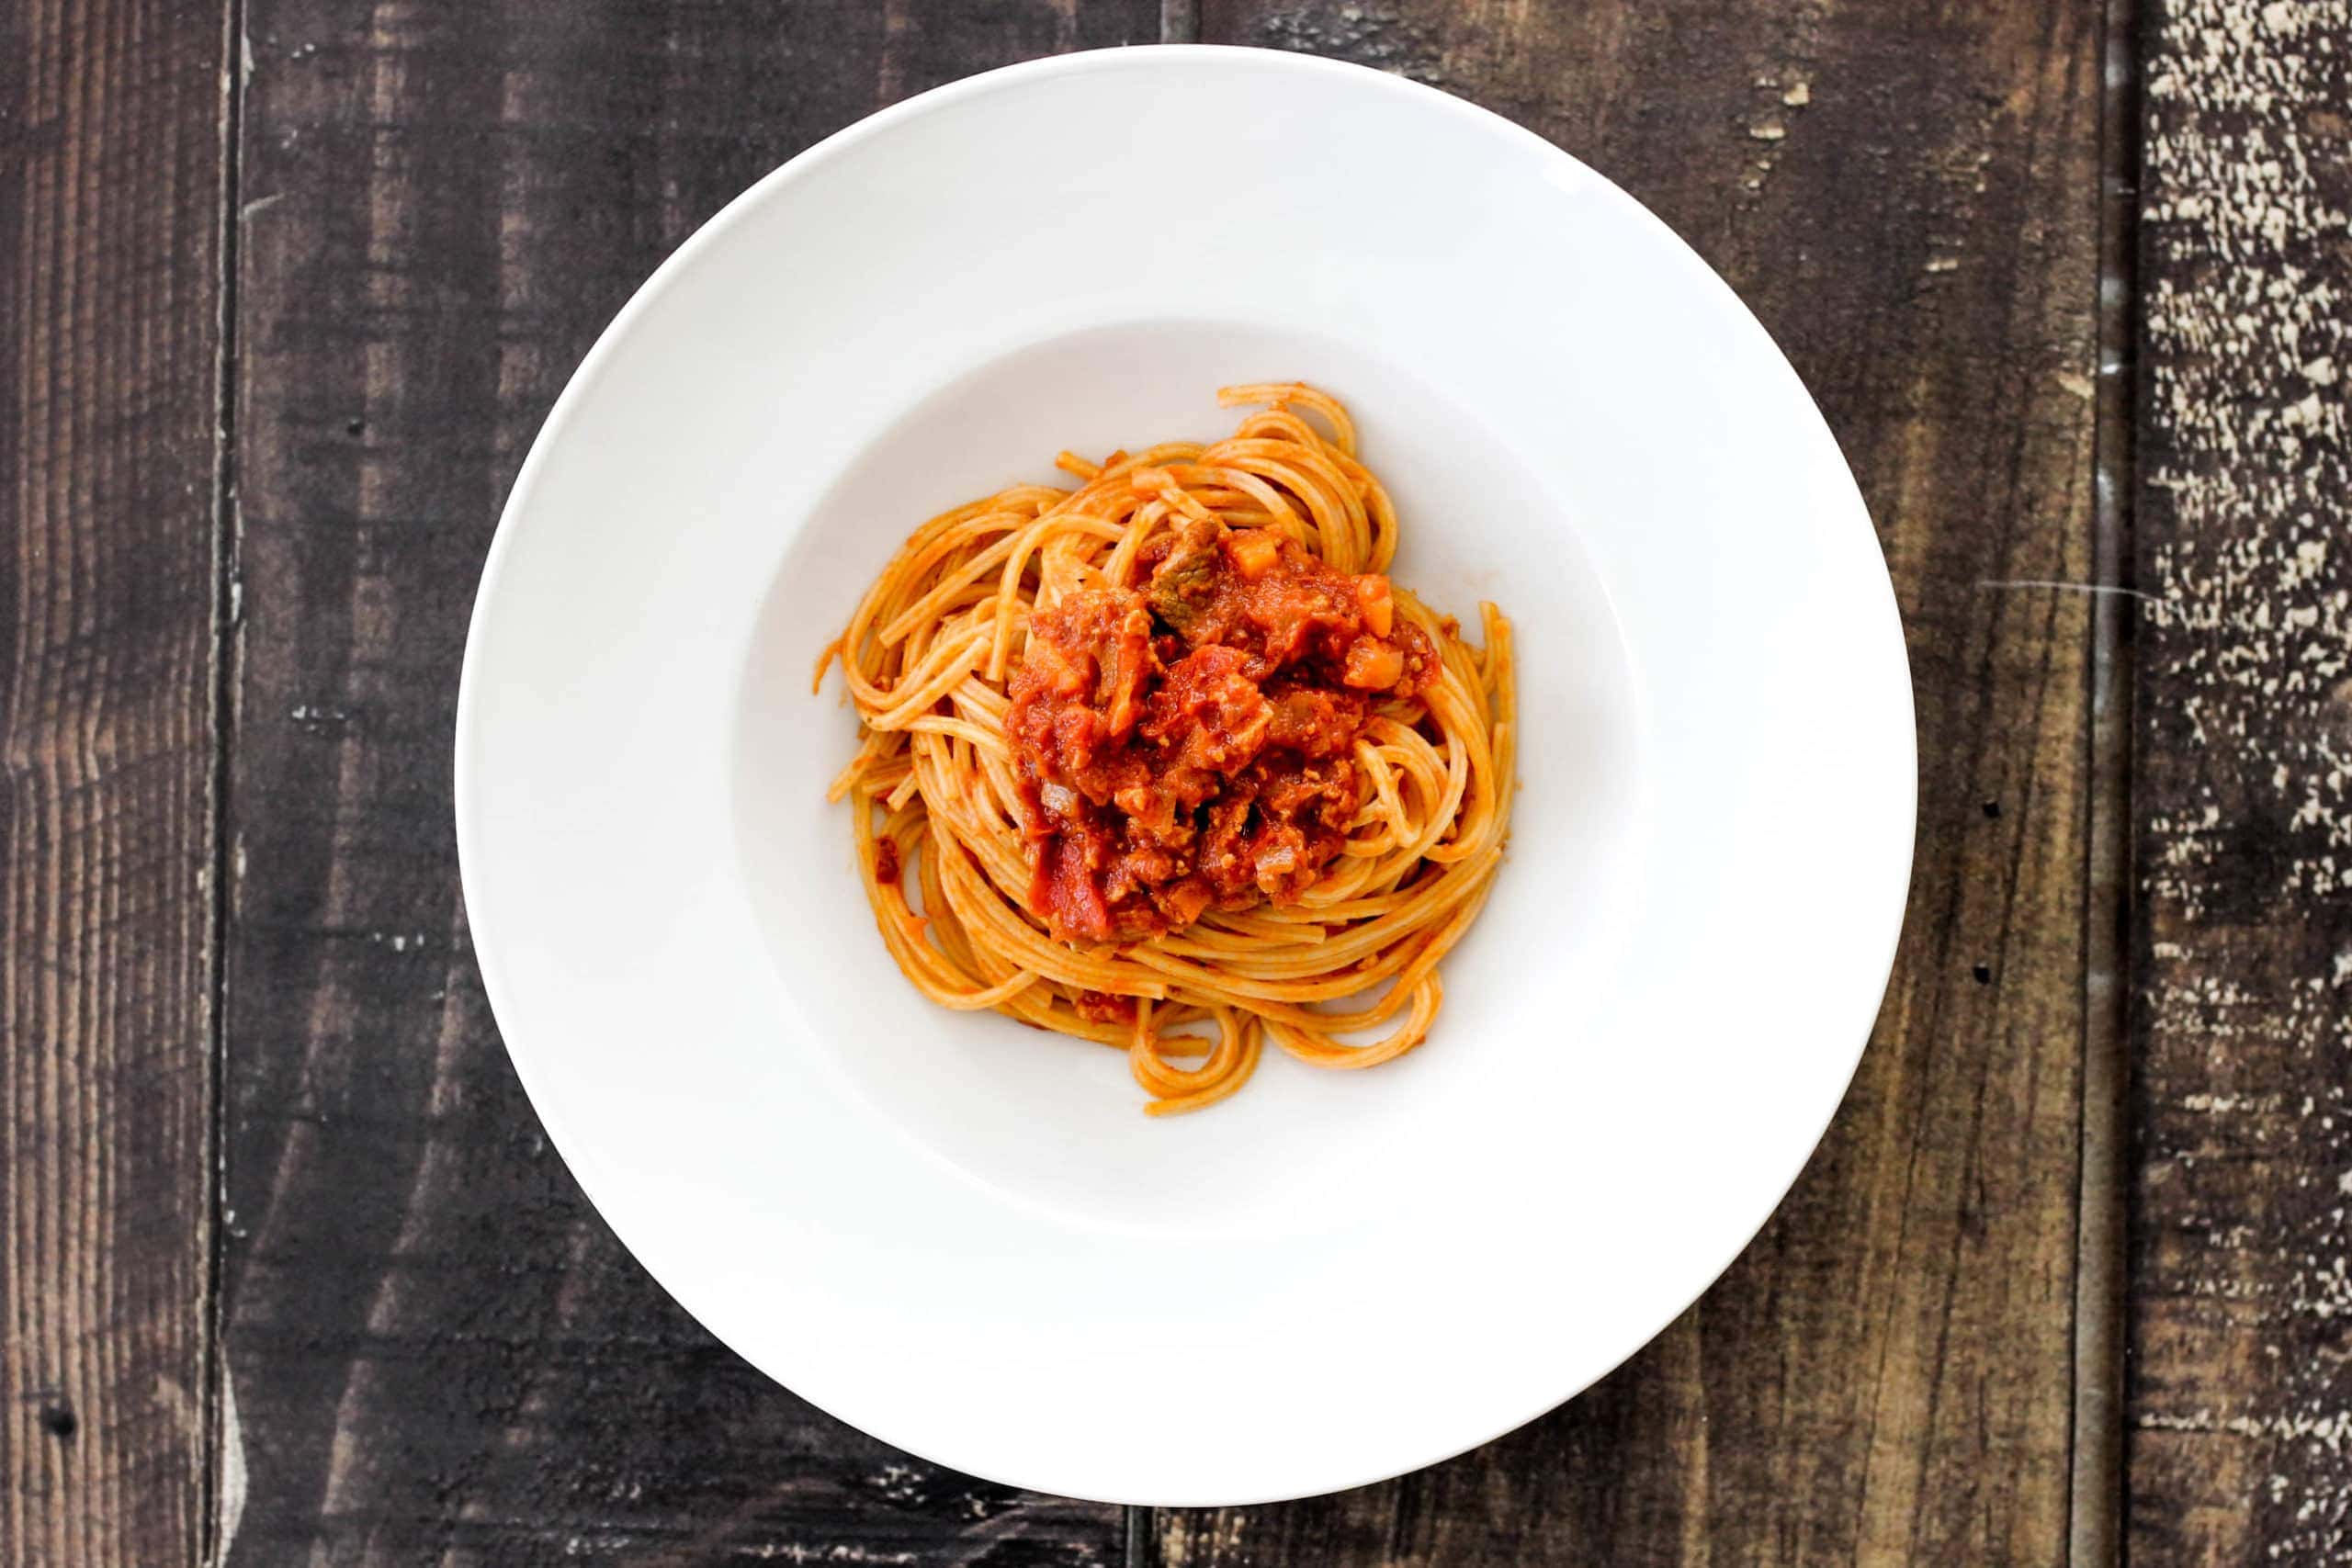 https://www.nonnabox.com/wp-content/uploads/2020/07/Spaghetti_Alla_Chitarra_with_Pork_and_Lamb_sauce-scaled.jpg